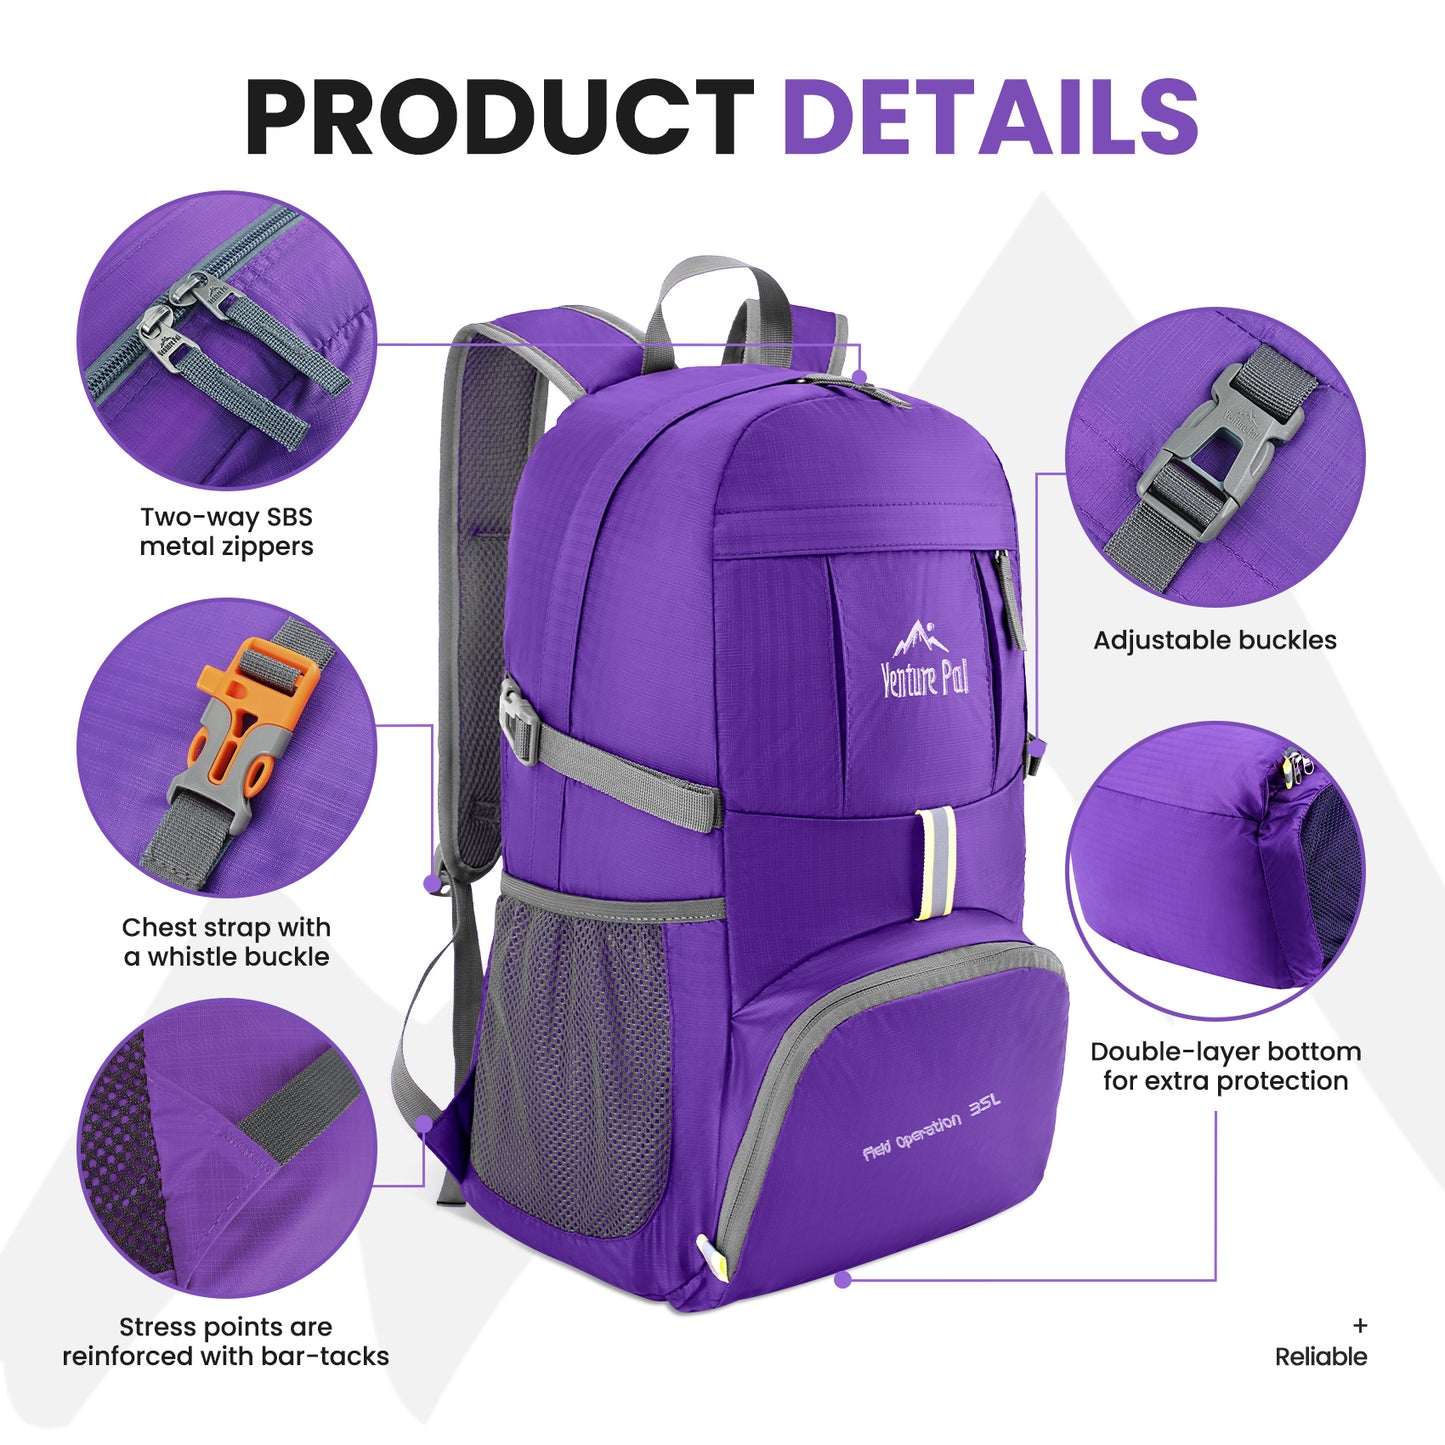 Venture Pal Purple 35L Double-Layer Bottom & Shoulder Straps Sports Backpack